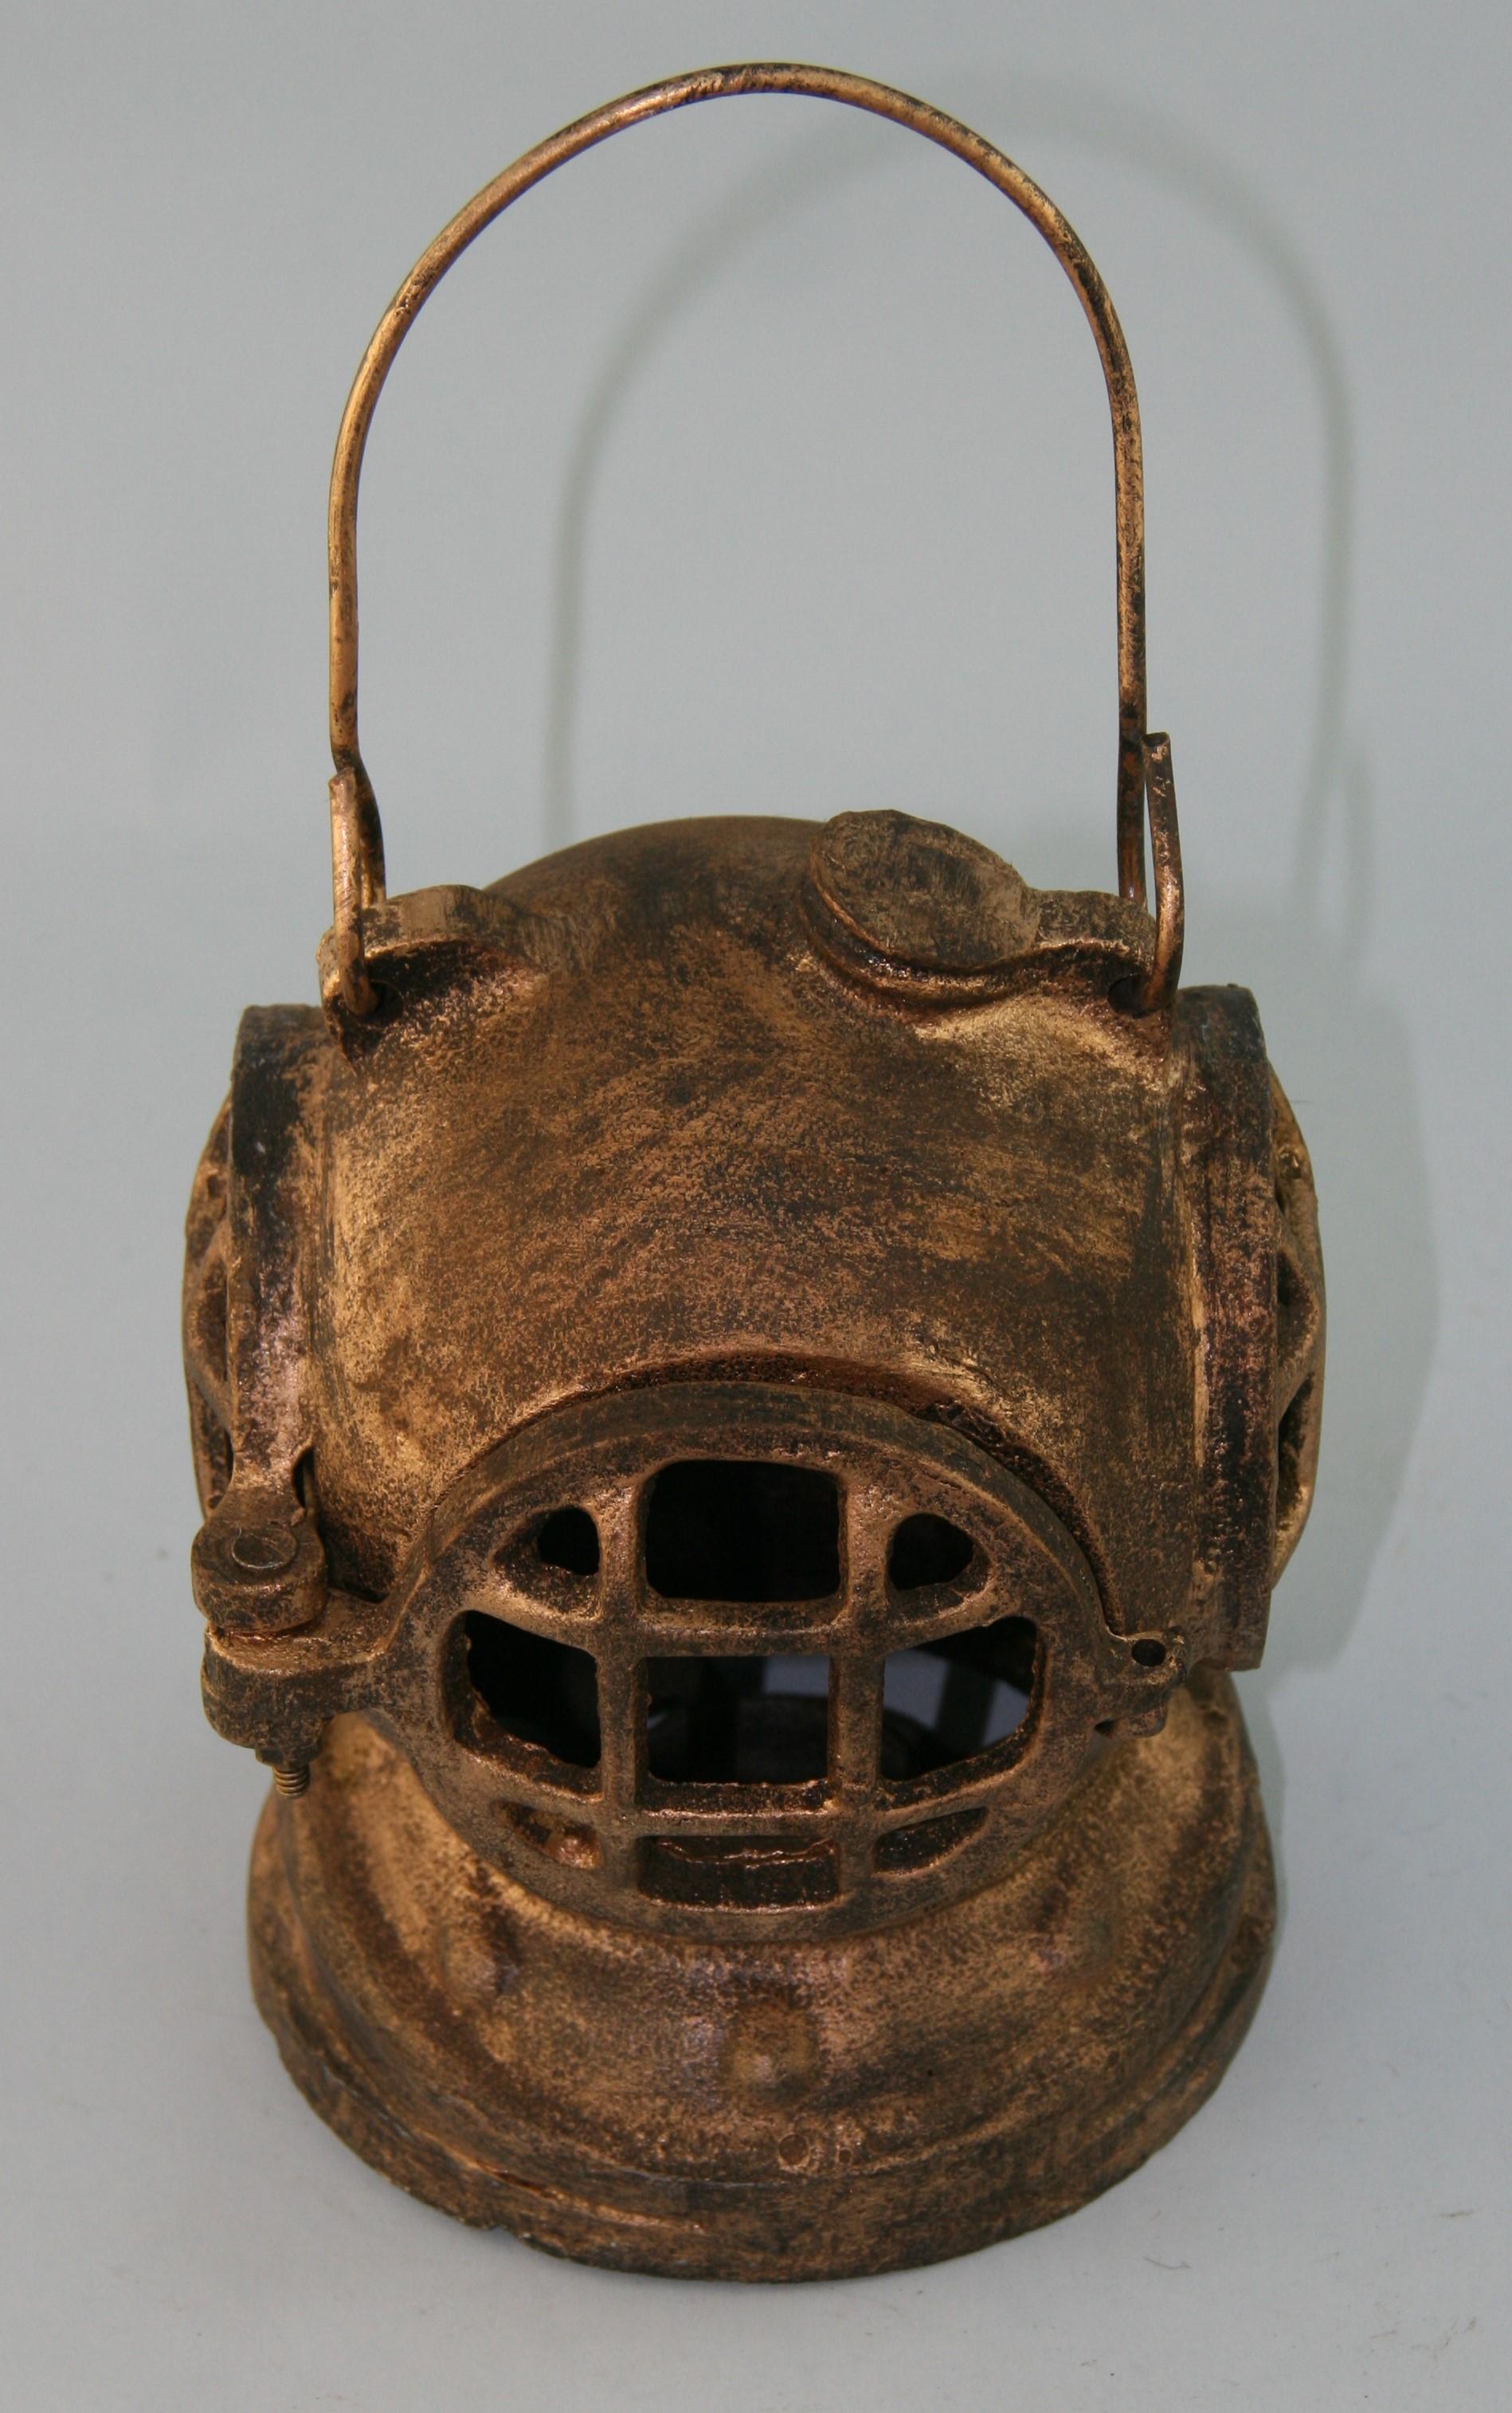 Japanese unusual deep sea divers helmet garden lighting lantern.